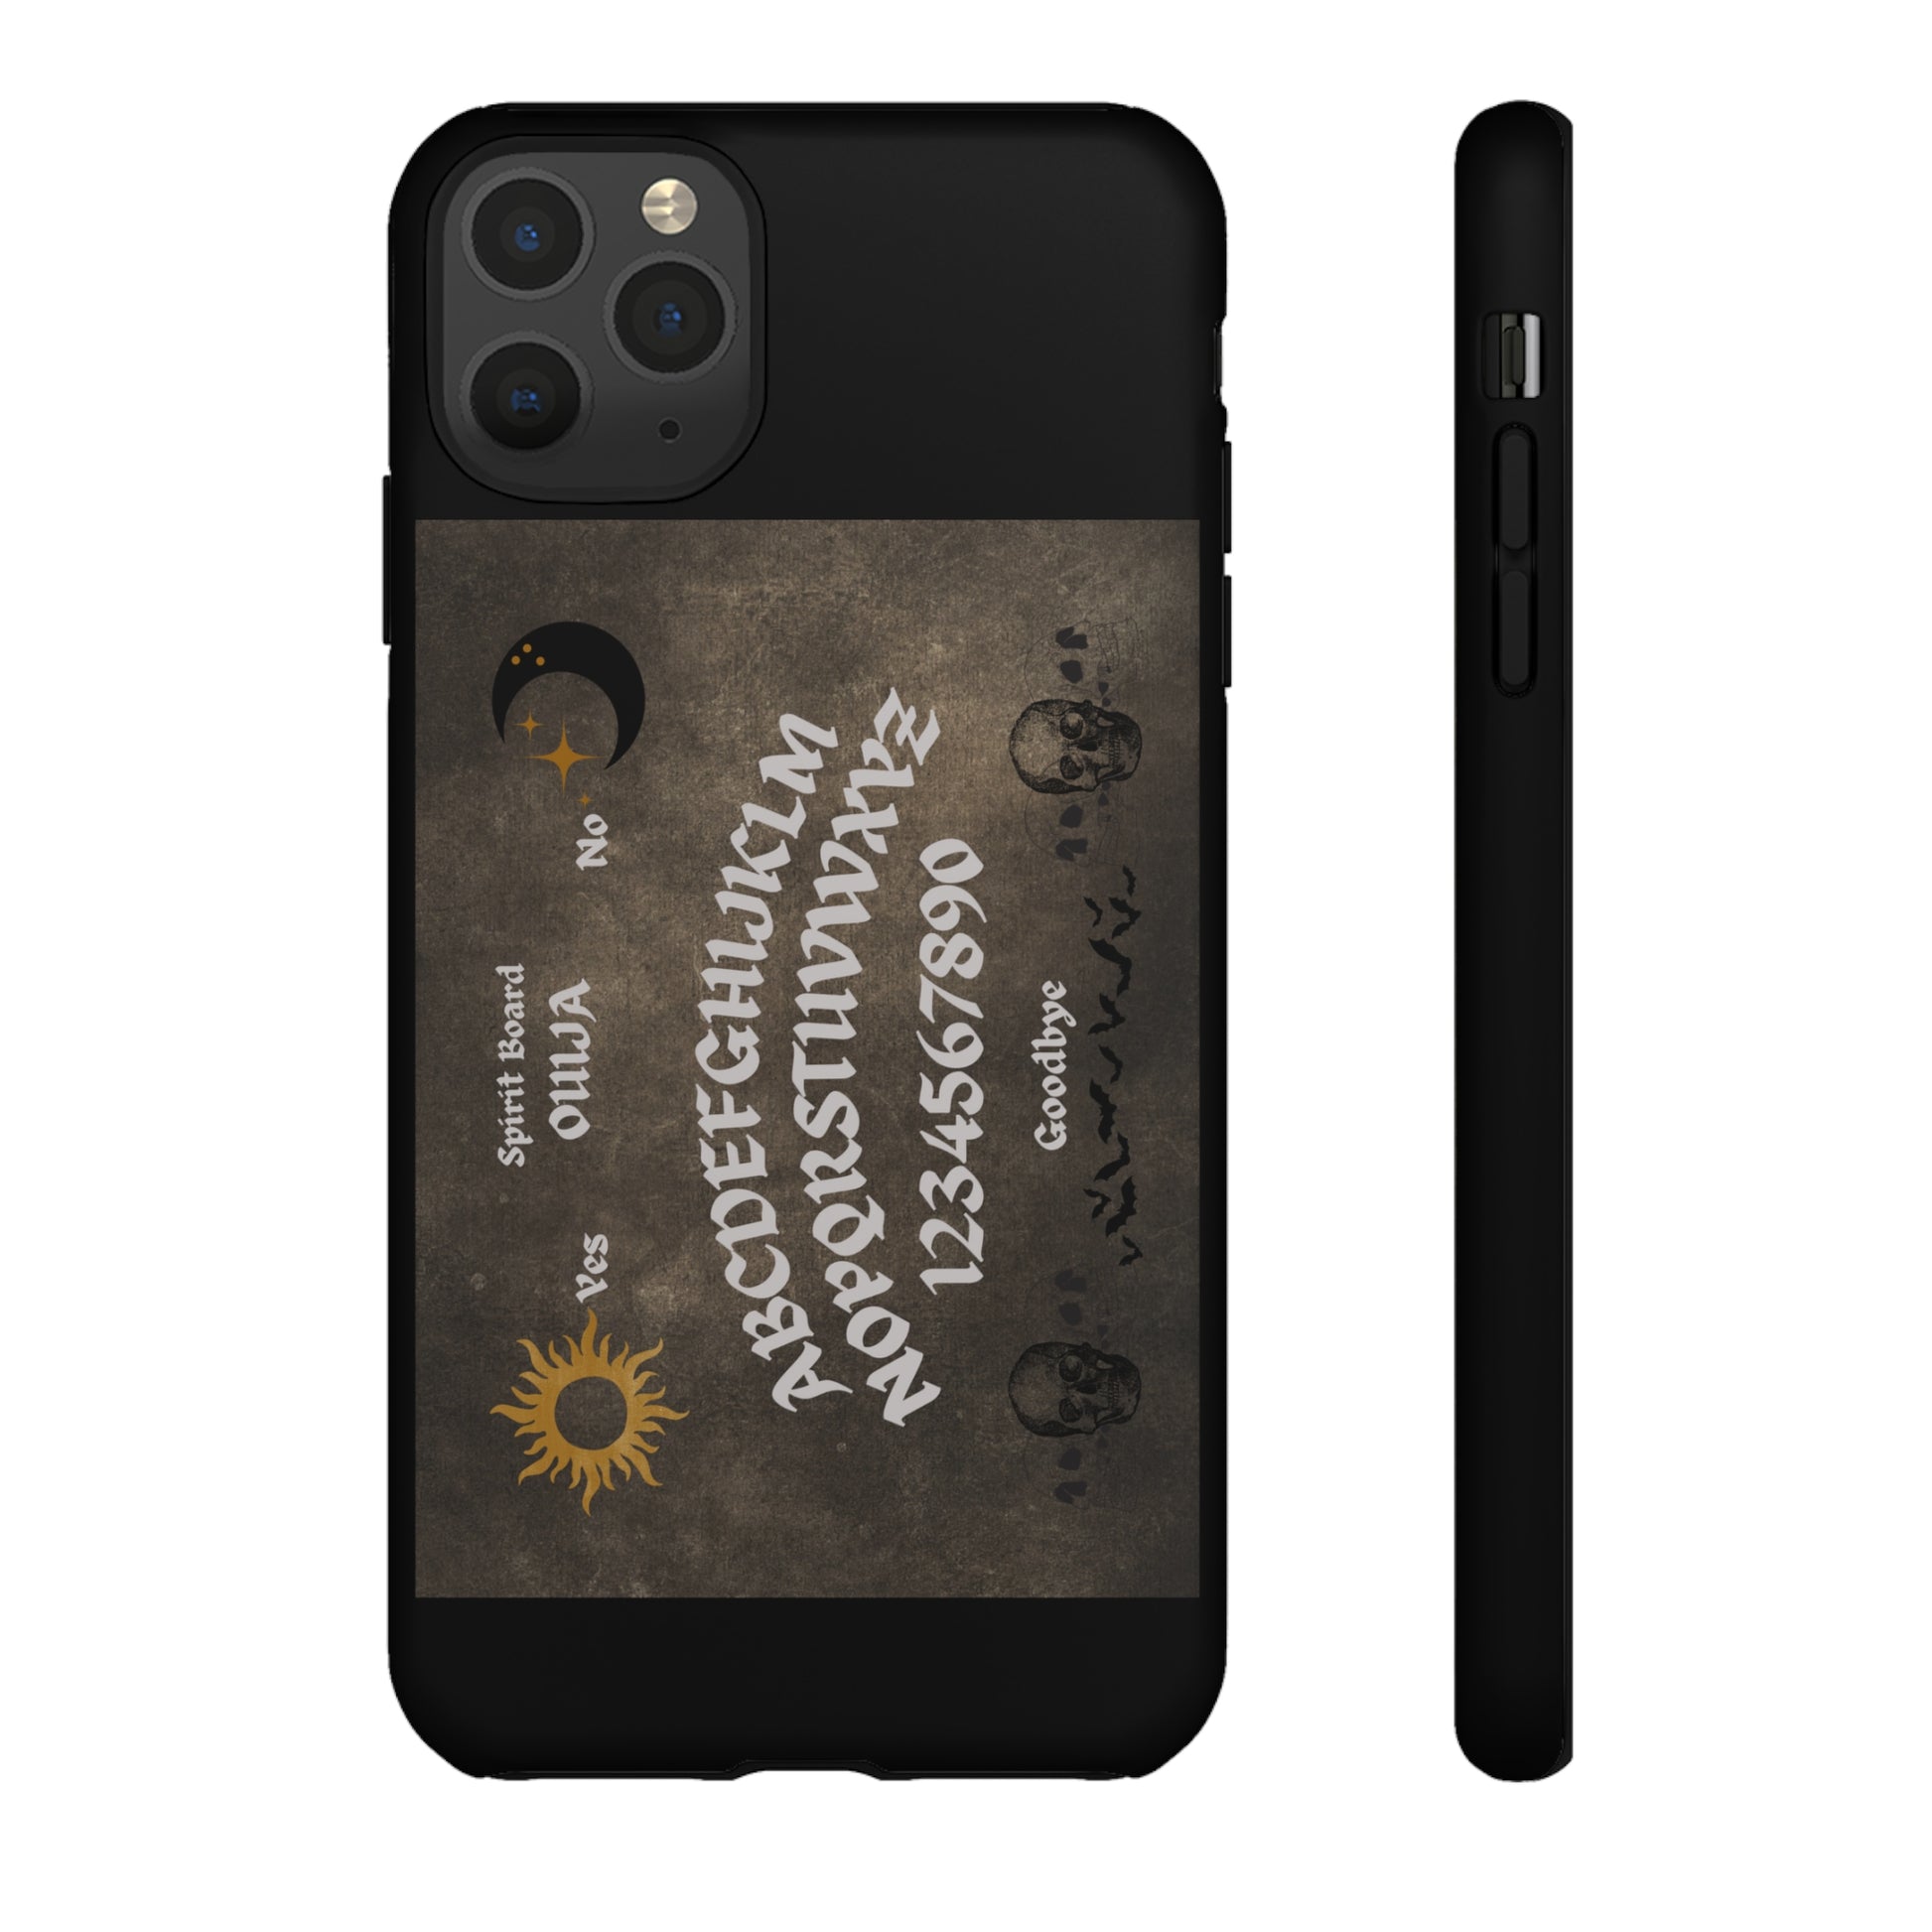 Spirit Ouija Board Tough Case for Samsung iPhone GooglePhone CaseVTZdesignsiPhone 11 Pro MaxMatteAccessoriesboardGlossy